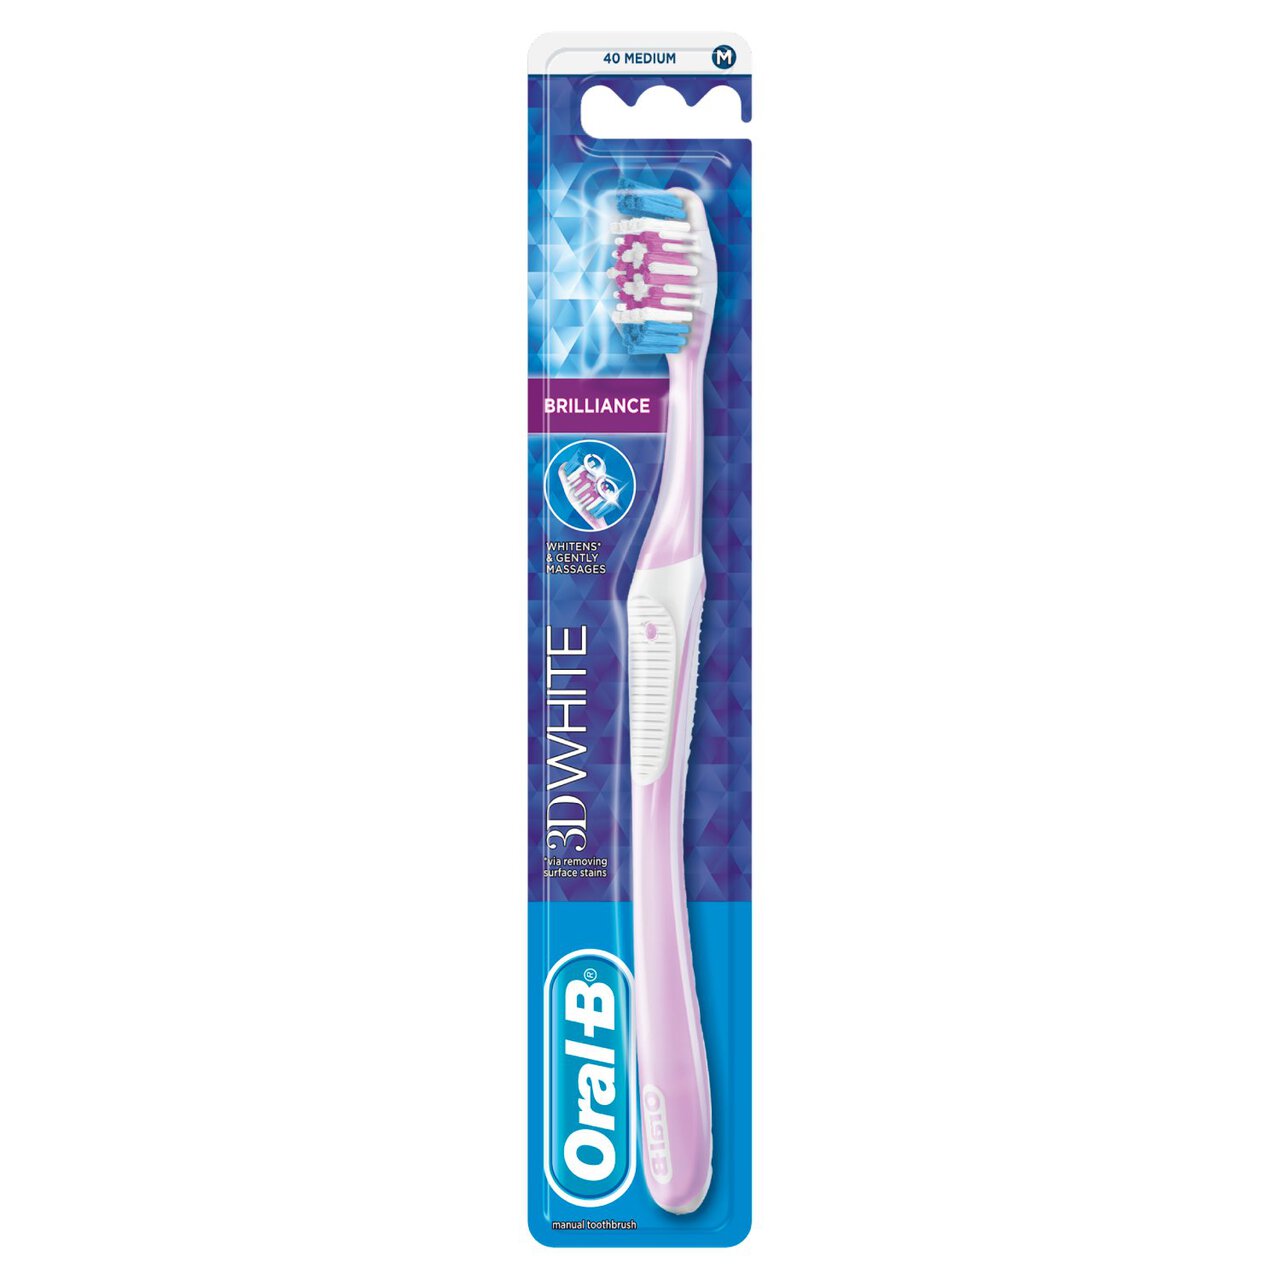 Oral-B 3D White Brilliance 40 Medium Toothbrush